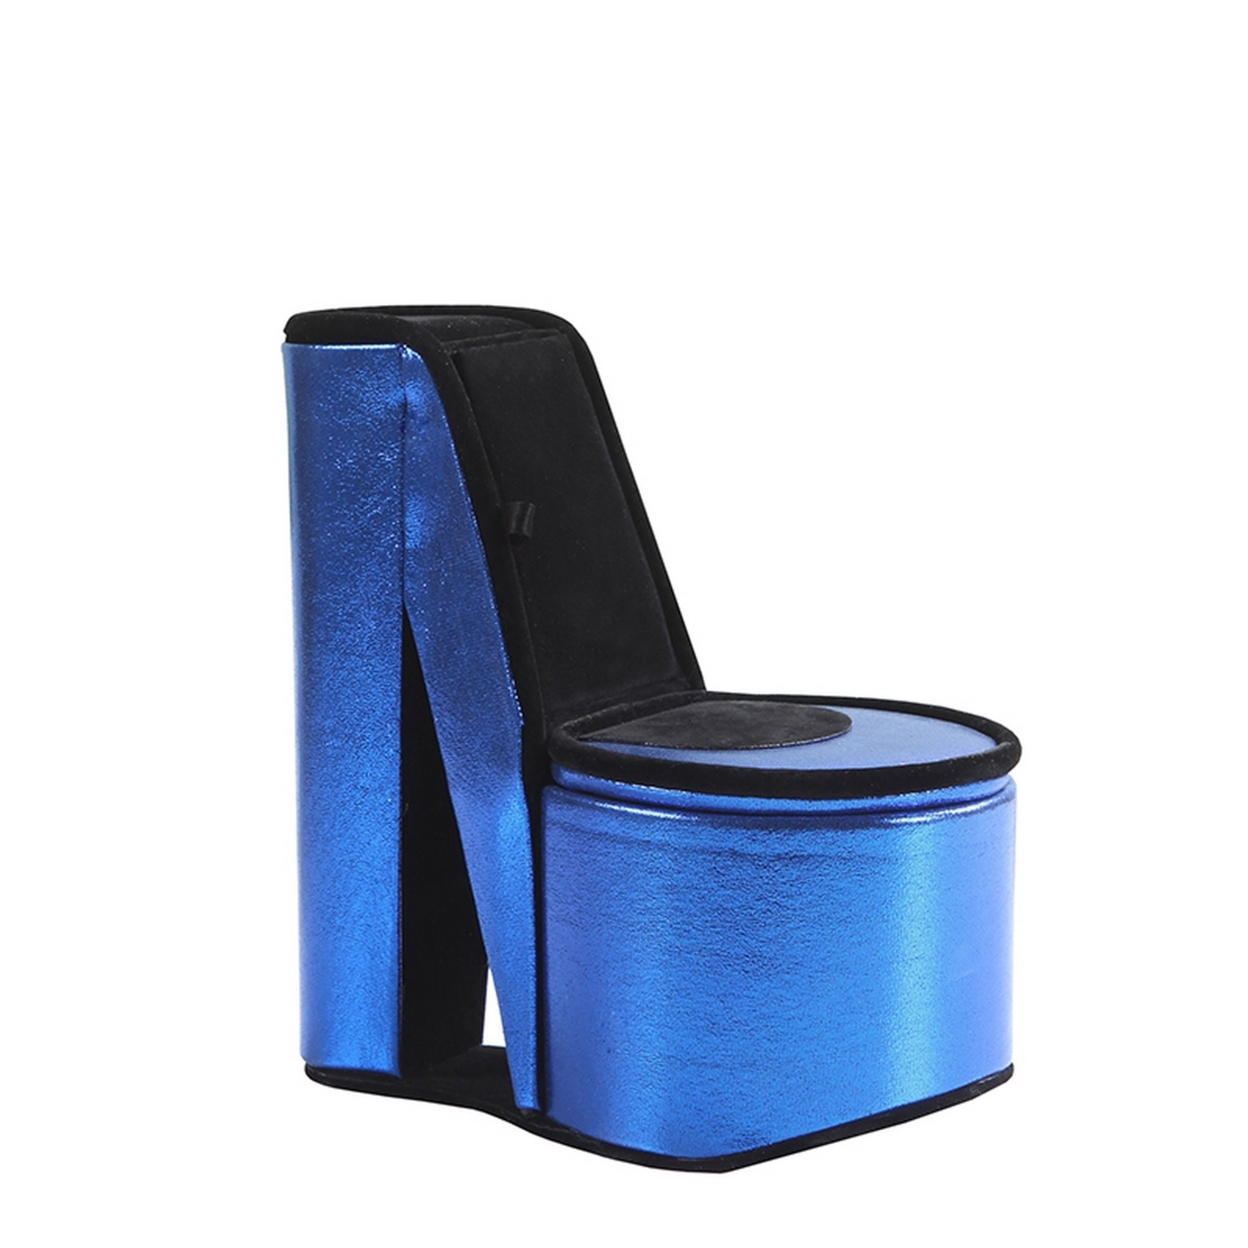 High Heel Shoe Jewelry Box With 2 Hooks And Storage, Blue- Saltoro Sherpi